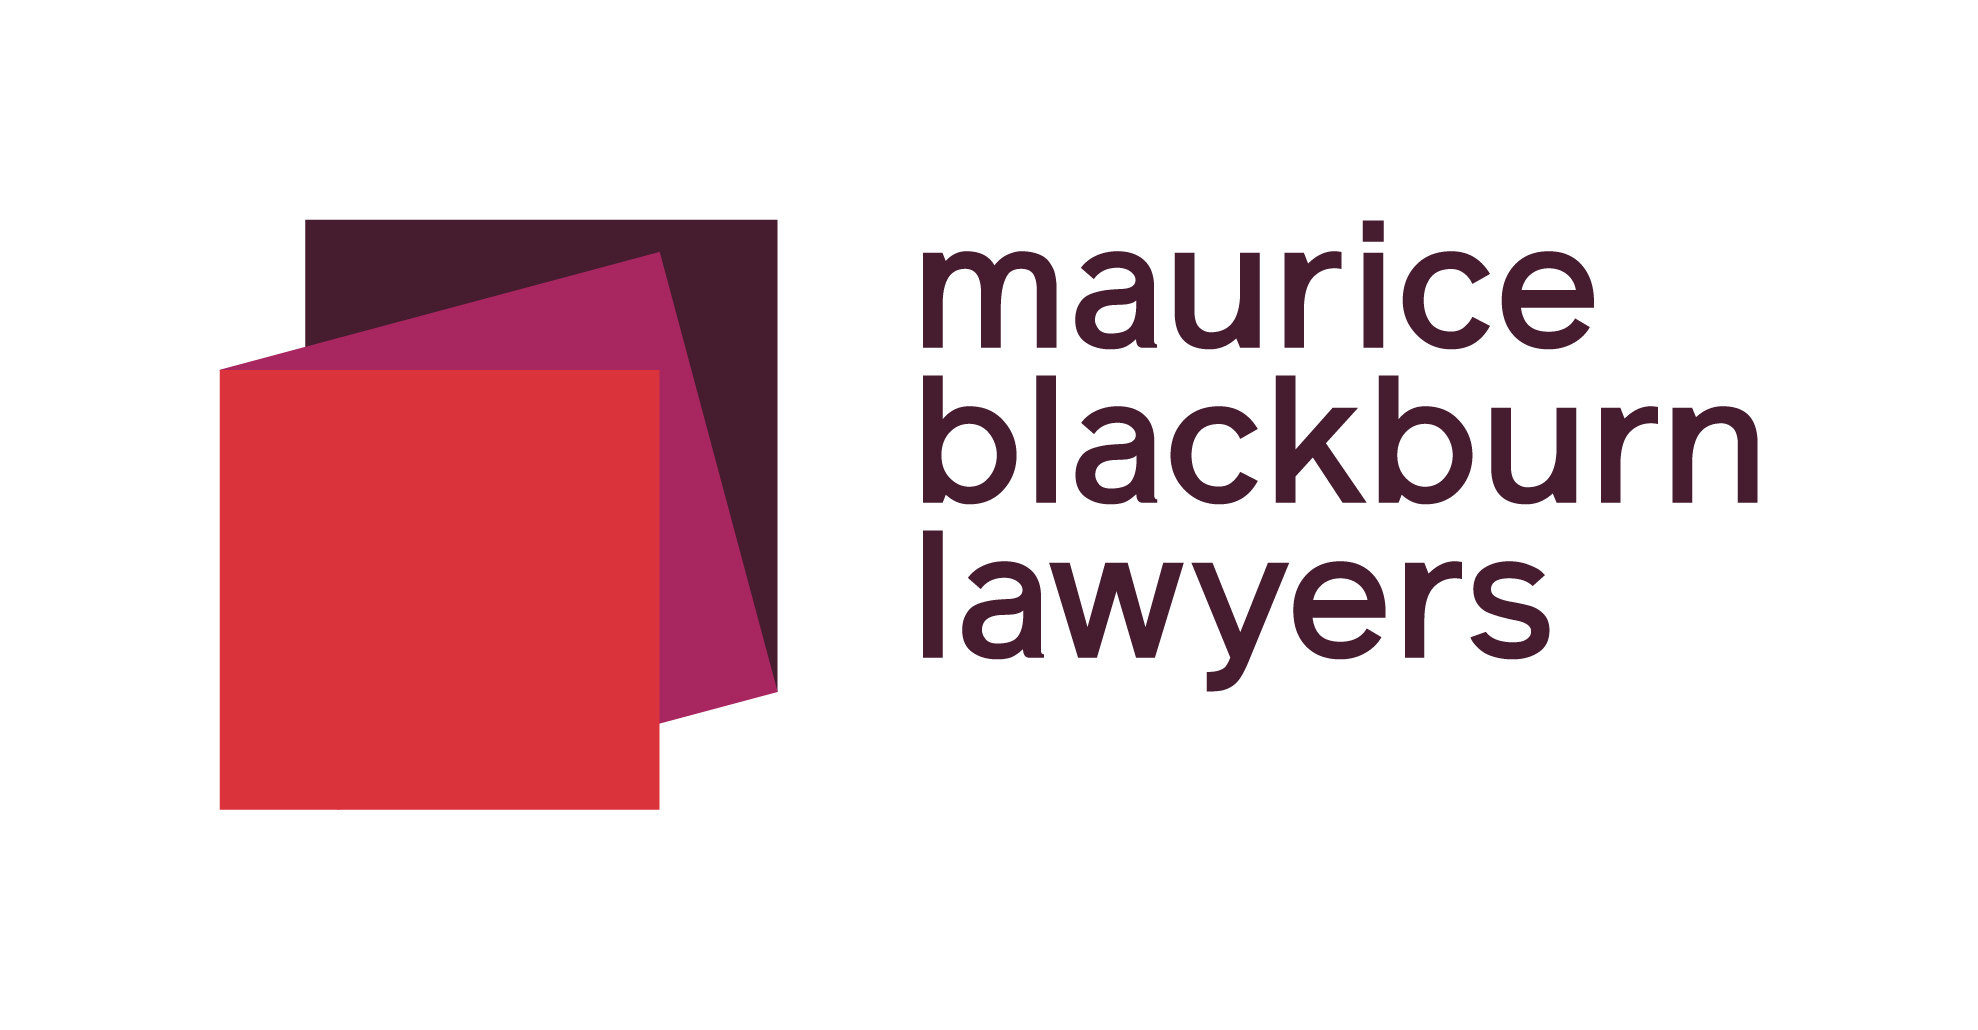 Maurice Blackburn Lawyers logo